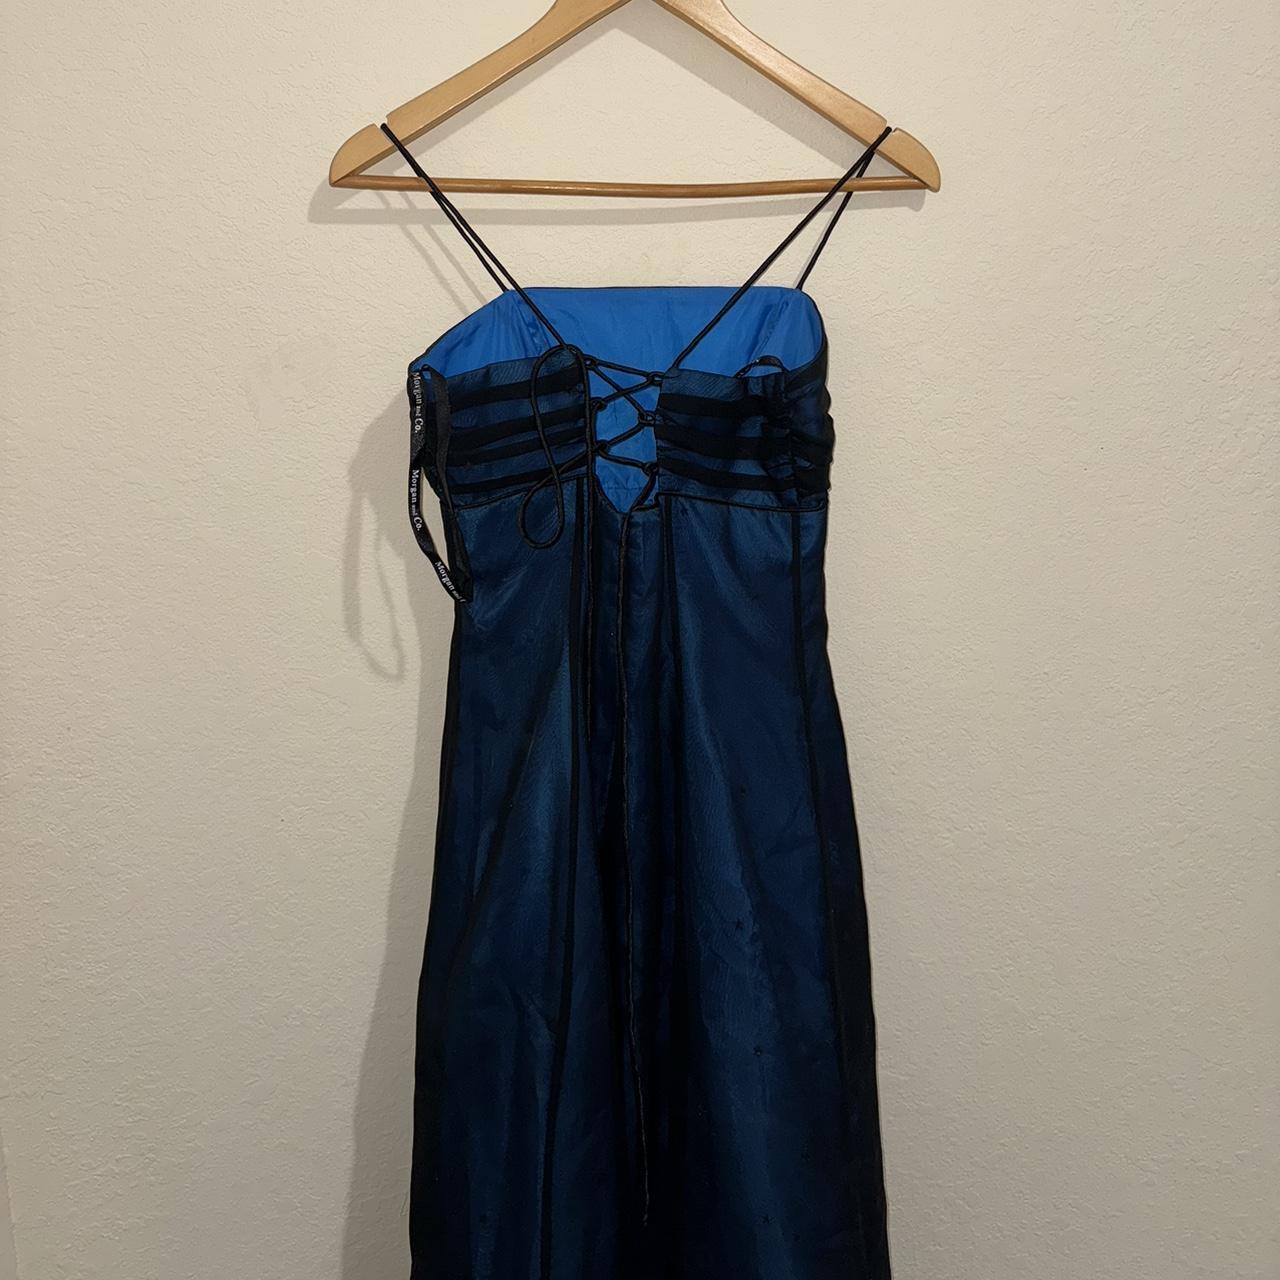 Morgan and Co. Formal blue dress - Depop